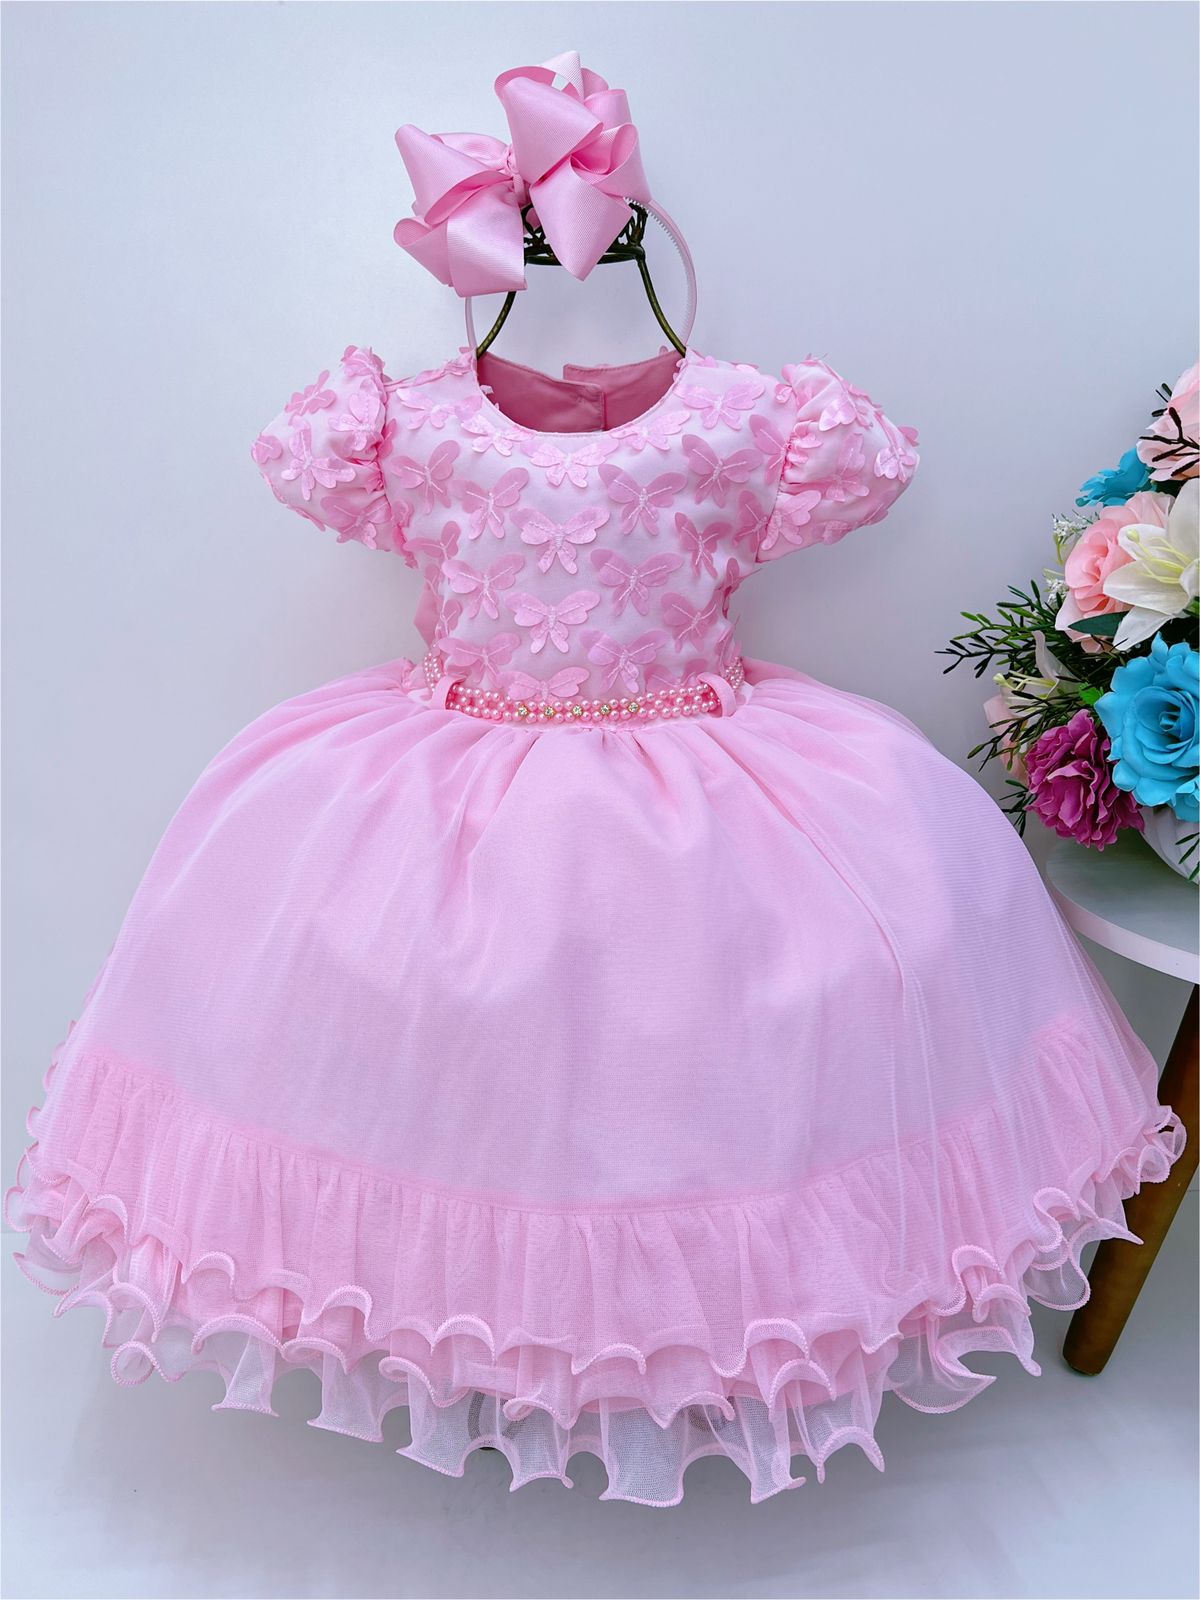 Vestido Infantil Rosa Aplique Borboletas Cinto de Pérolas